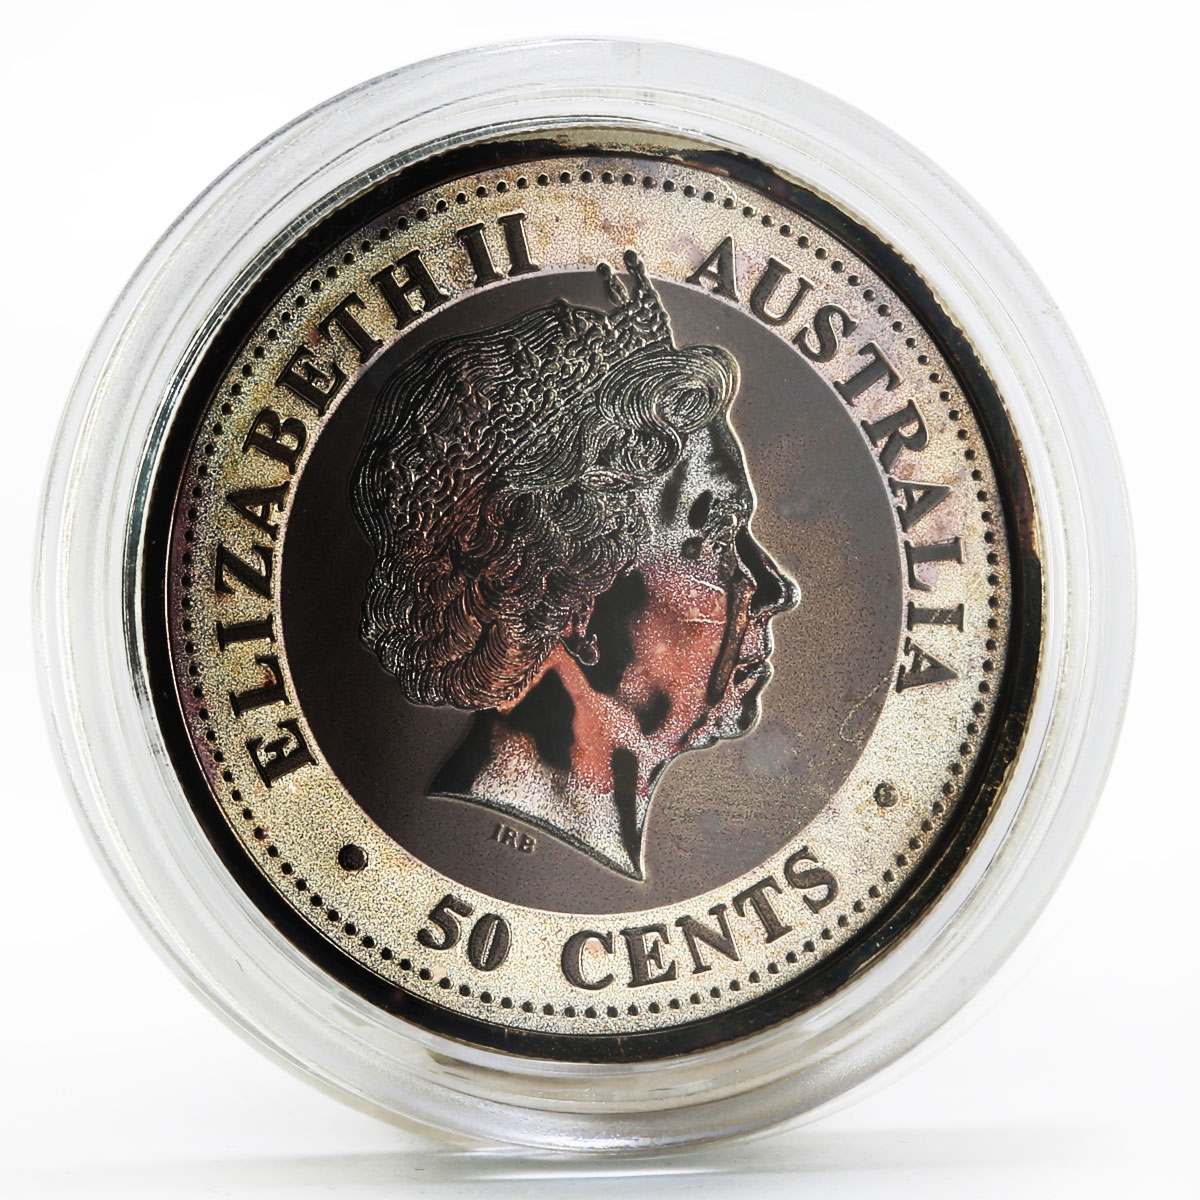 Australia 50 cents Lunar Calendar series I Year of the Snake silver coin 2001